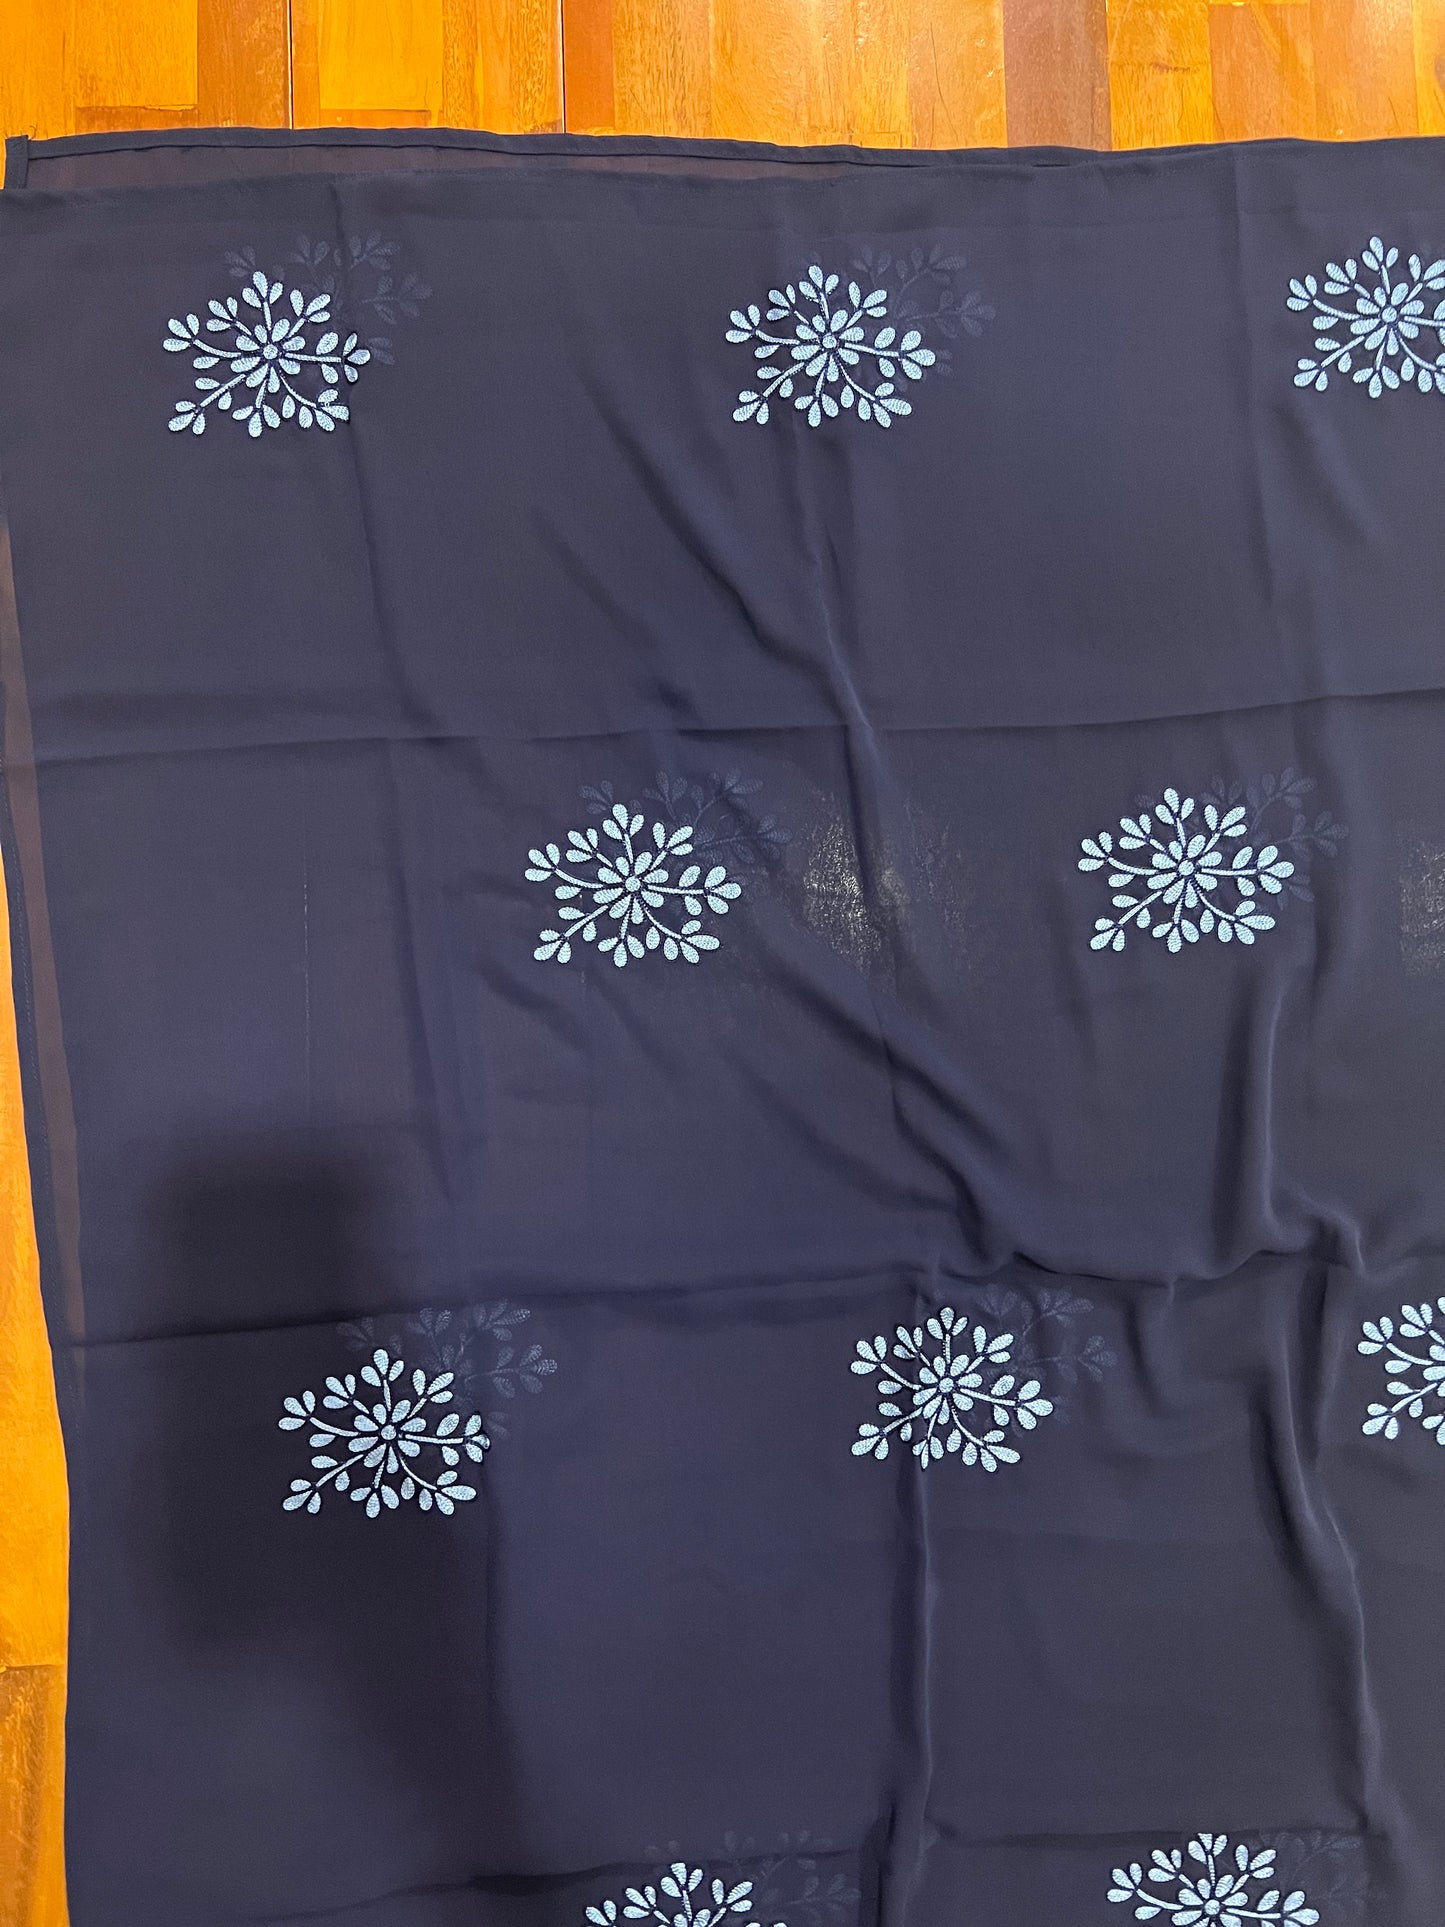 Southloom™ Georgette Churidar Salwar Suit Material in Navy Blue with Floral Thread work Design